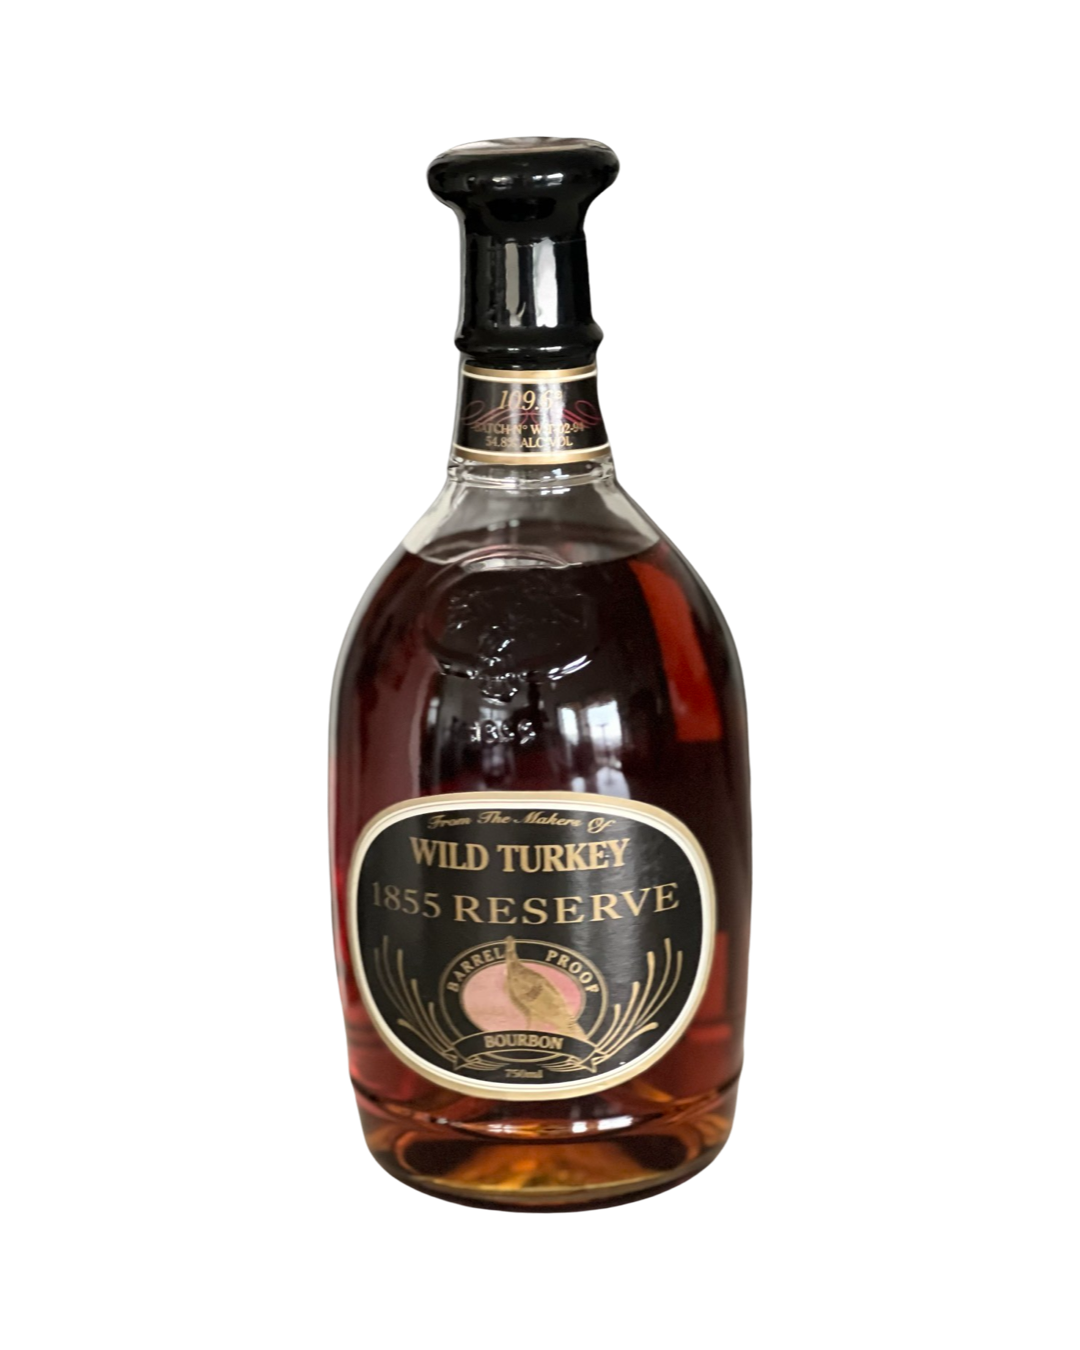 1992 Wild Turkey 1855 Reserve Barrel 109.66 Proof Bourbon Whiskey 750m